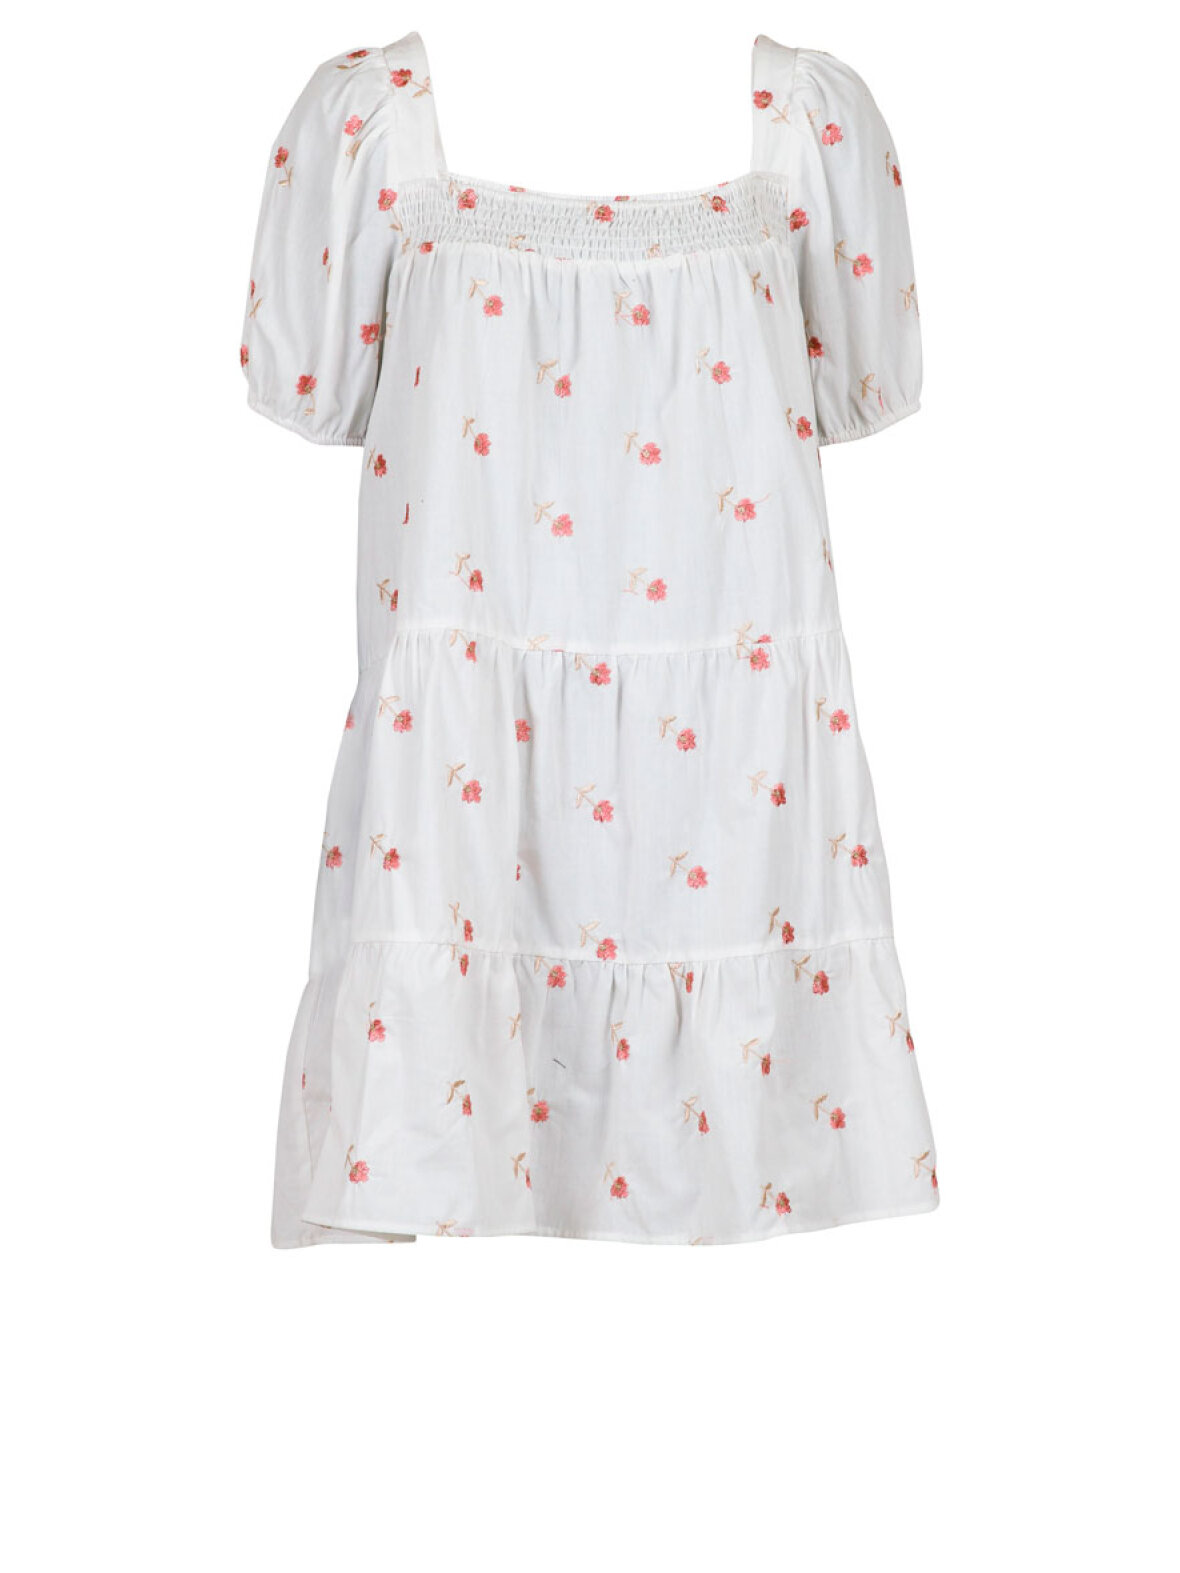 Fordeling Male Fortære A'POKE - Neo Noir Mima Rosy Dress White - Shop hvid blomstret kjole